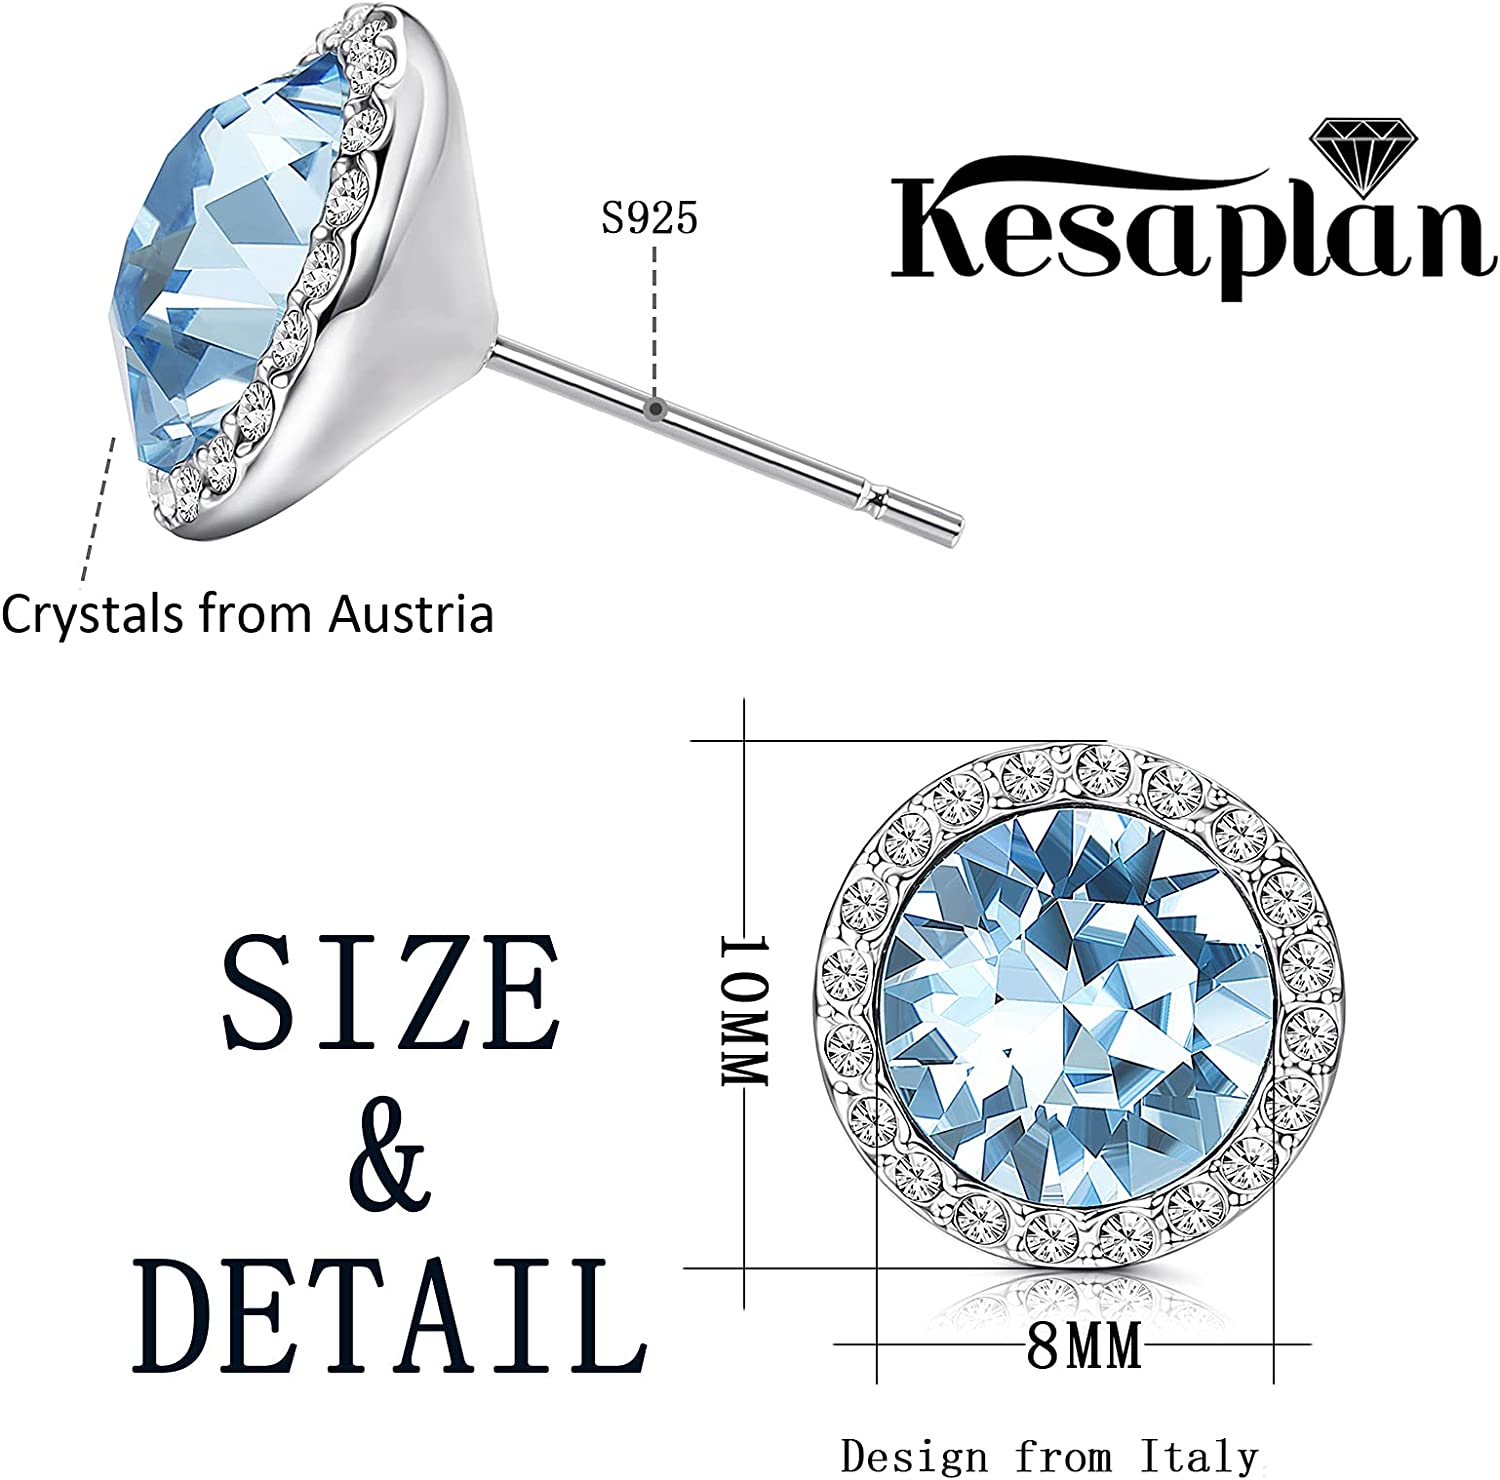 KesaPlan Sterling Silver Crystals Stud Earrings for Women, Made of Austria Crystals, Round-Cut Rhinestone Halo Stud Earrings Hypoallergenic